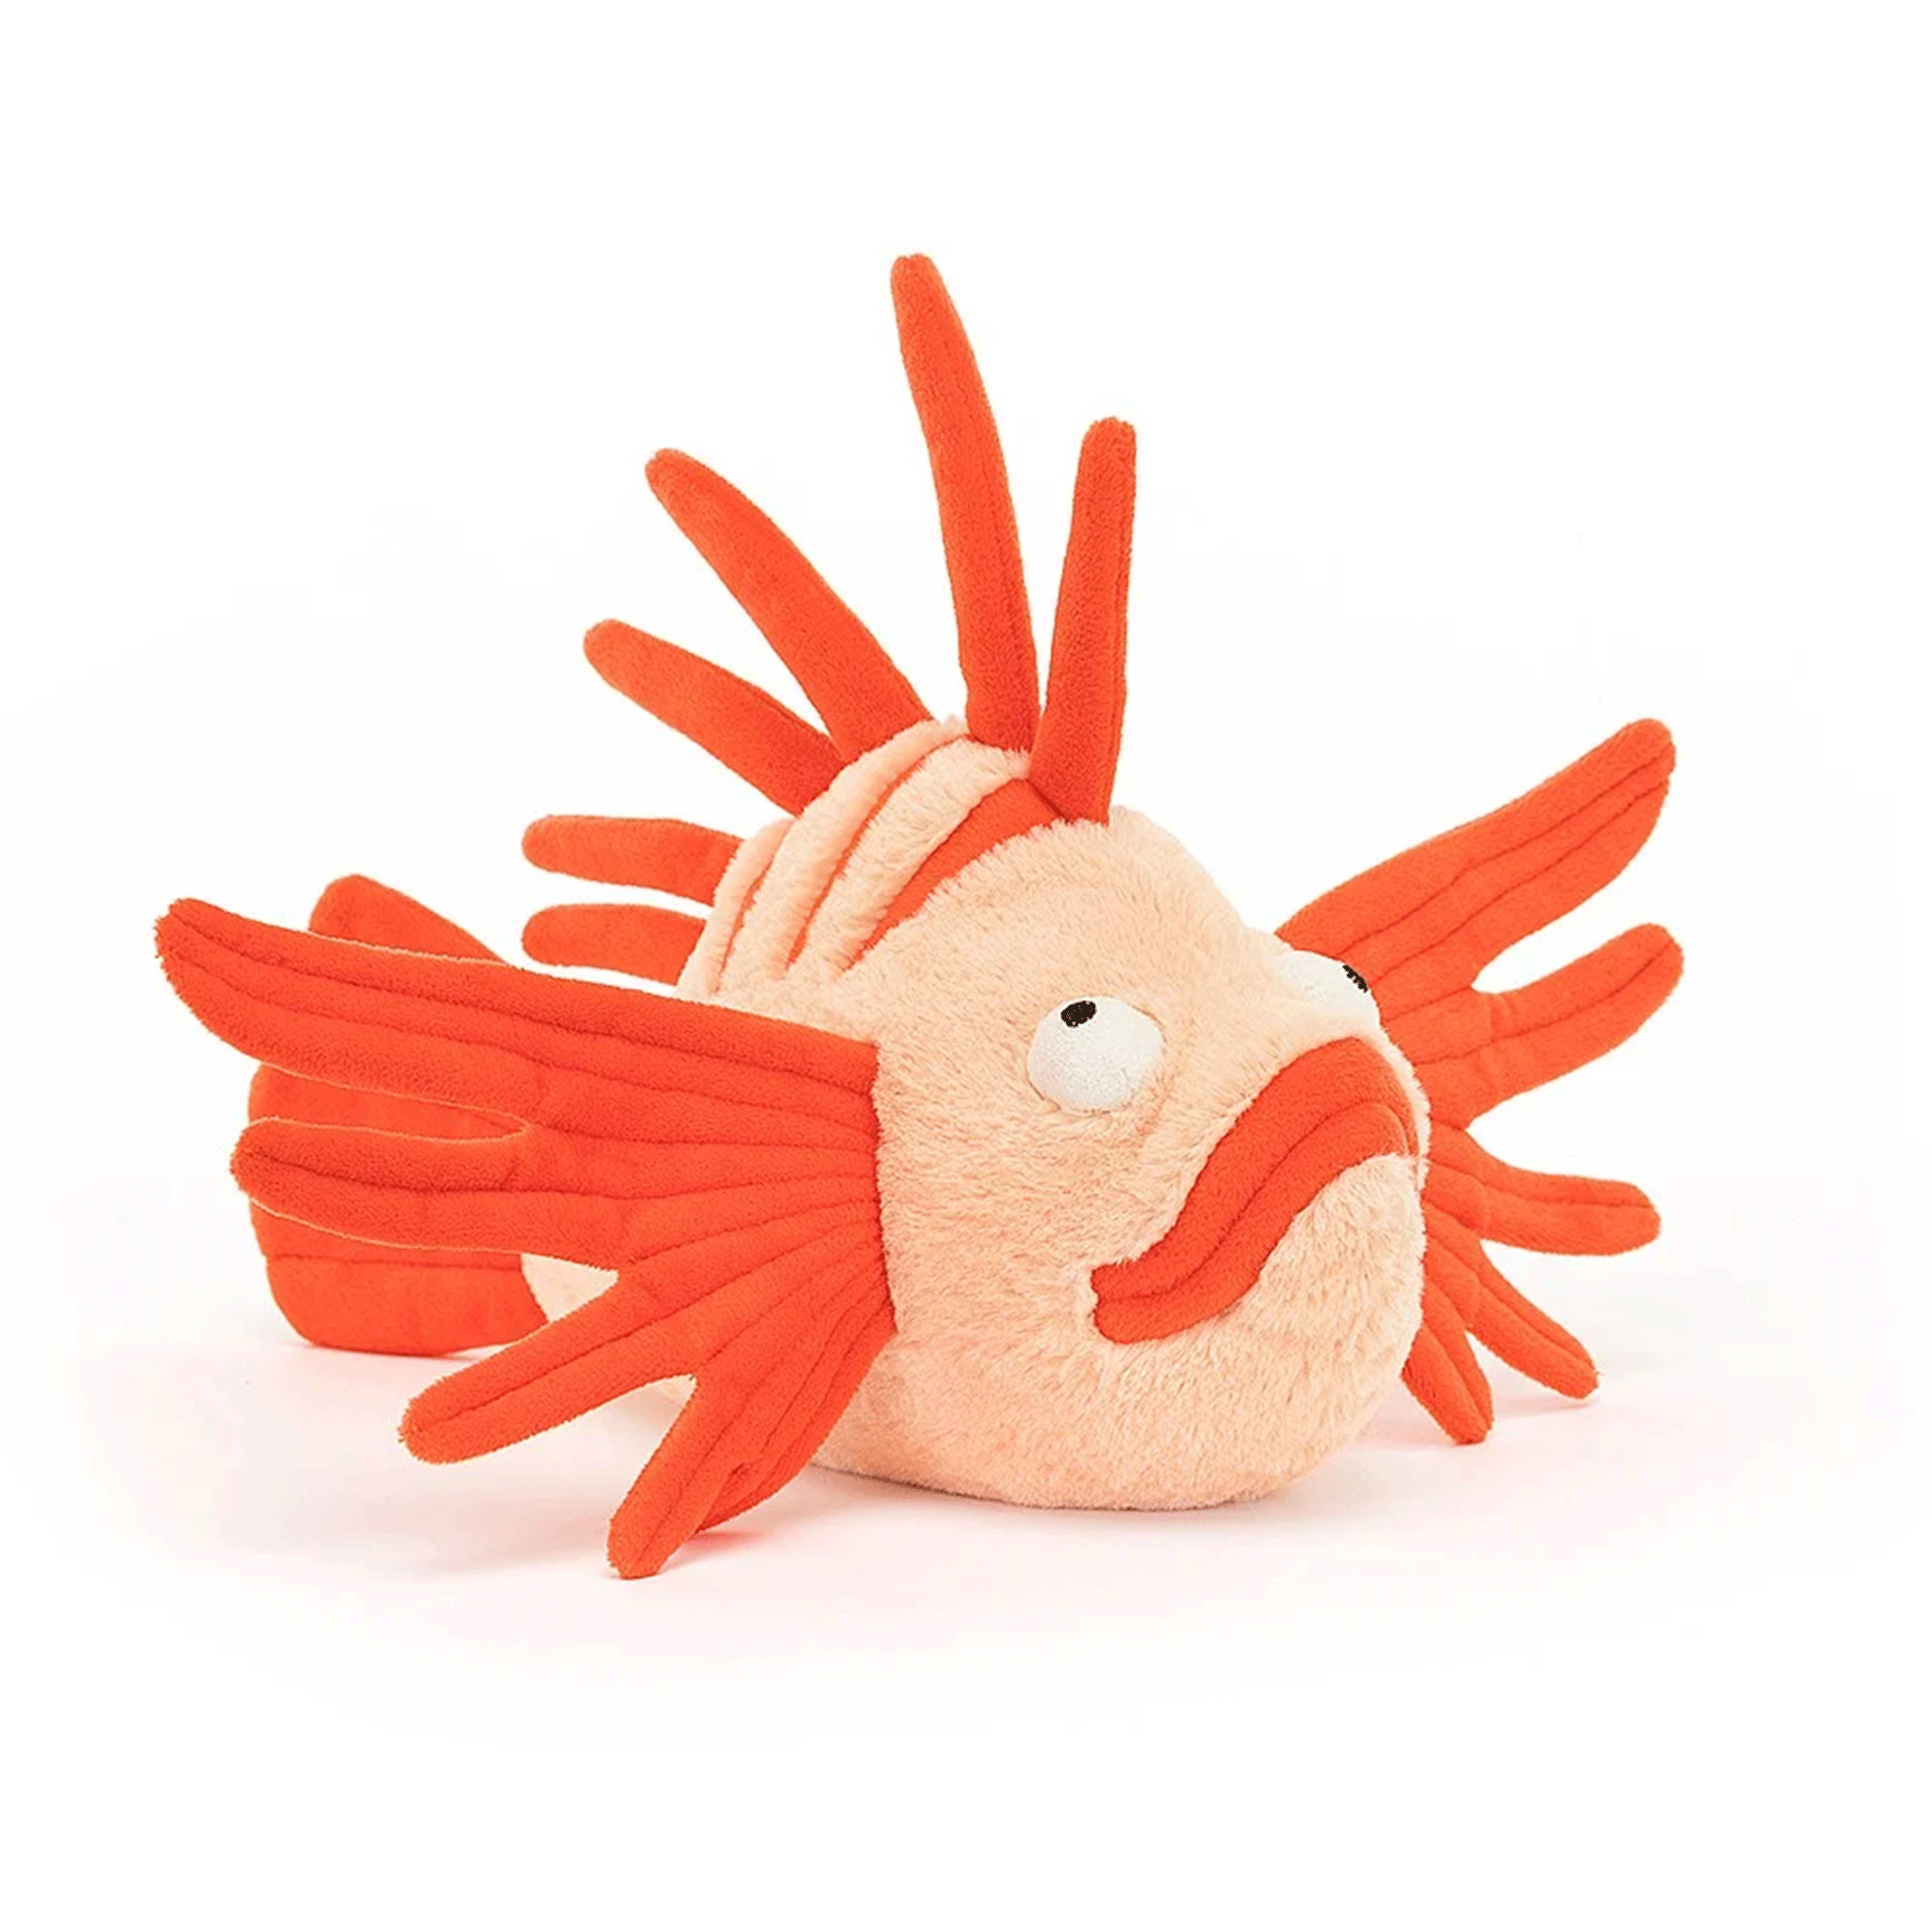 On a white background is orange lionfish shaped stuffed toy. 